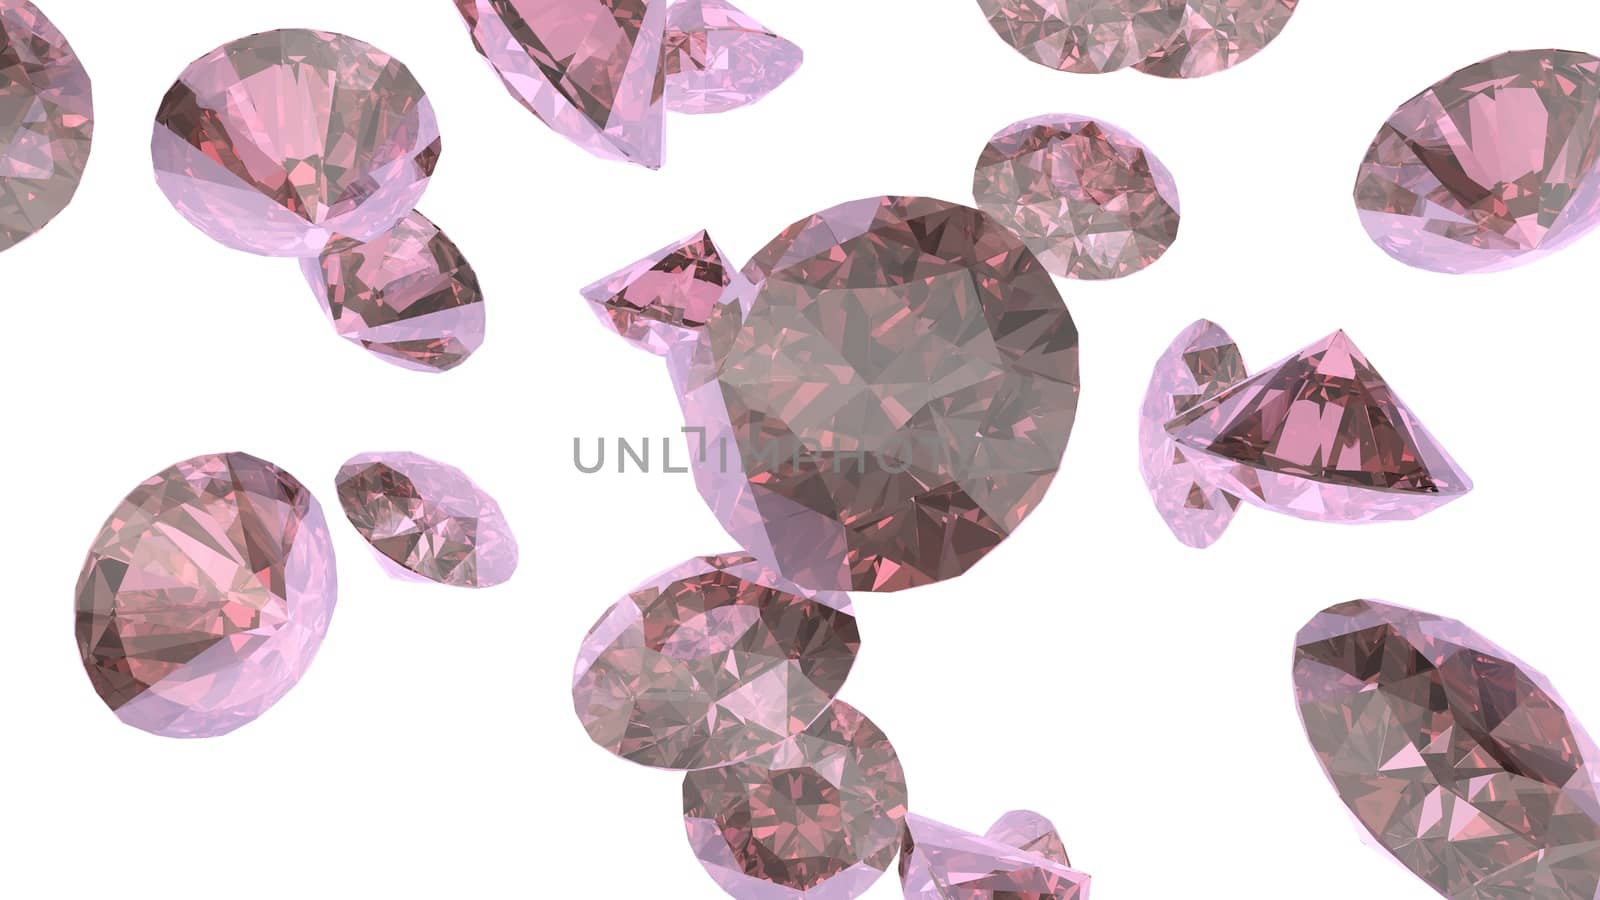 Collection of shiny gemstone diamond crystal on pinkish background. Jewelry background with diamonds.